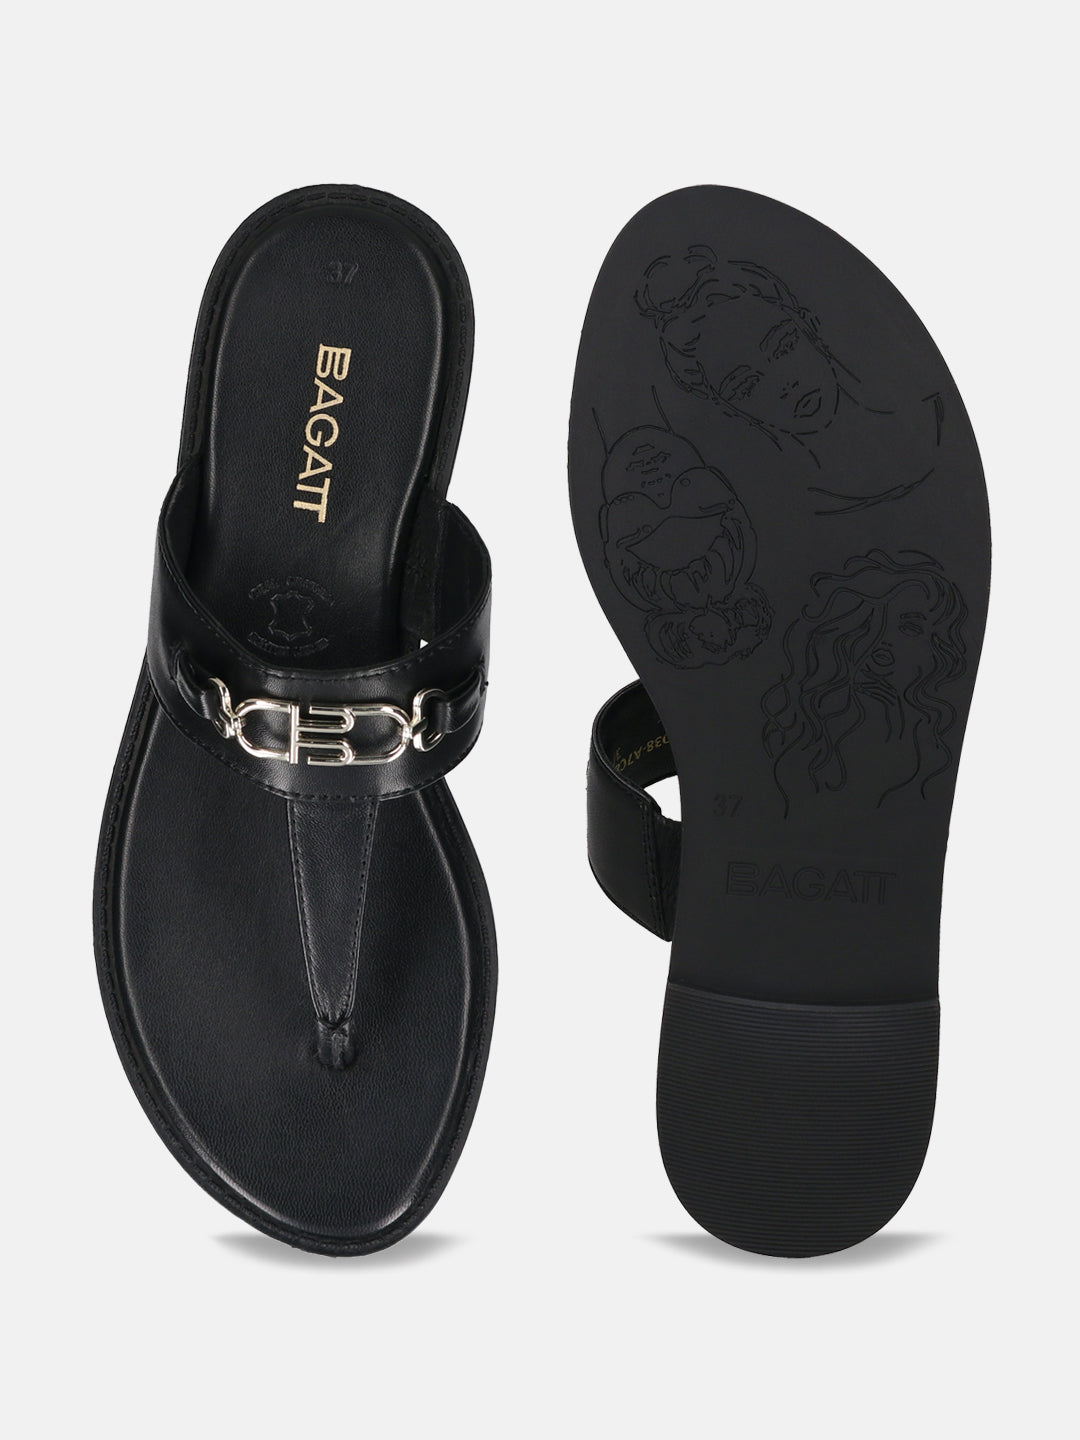 Goldy Black Thongs Sandals